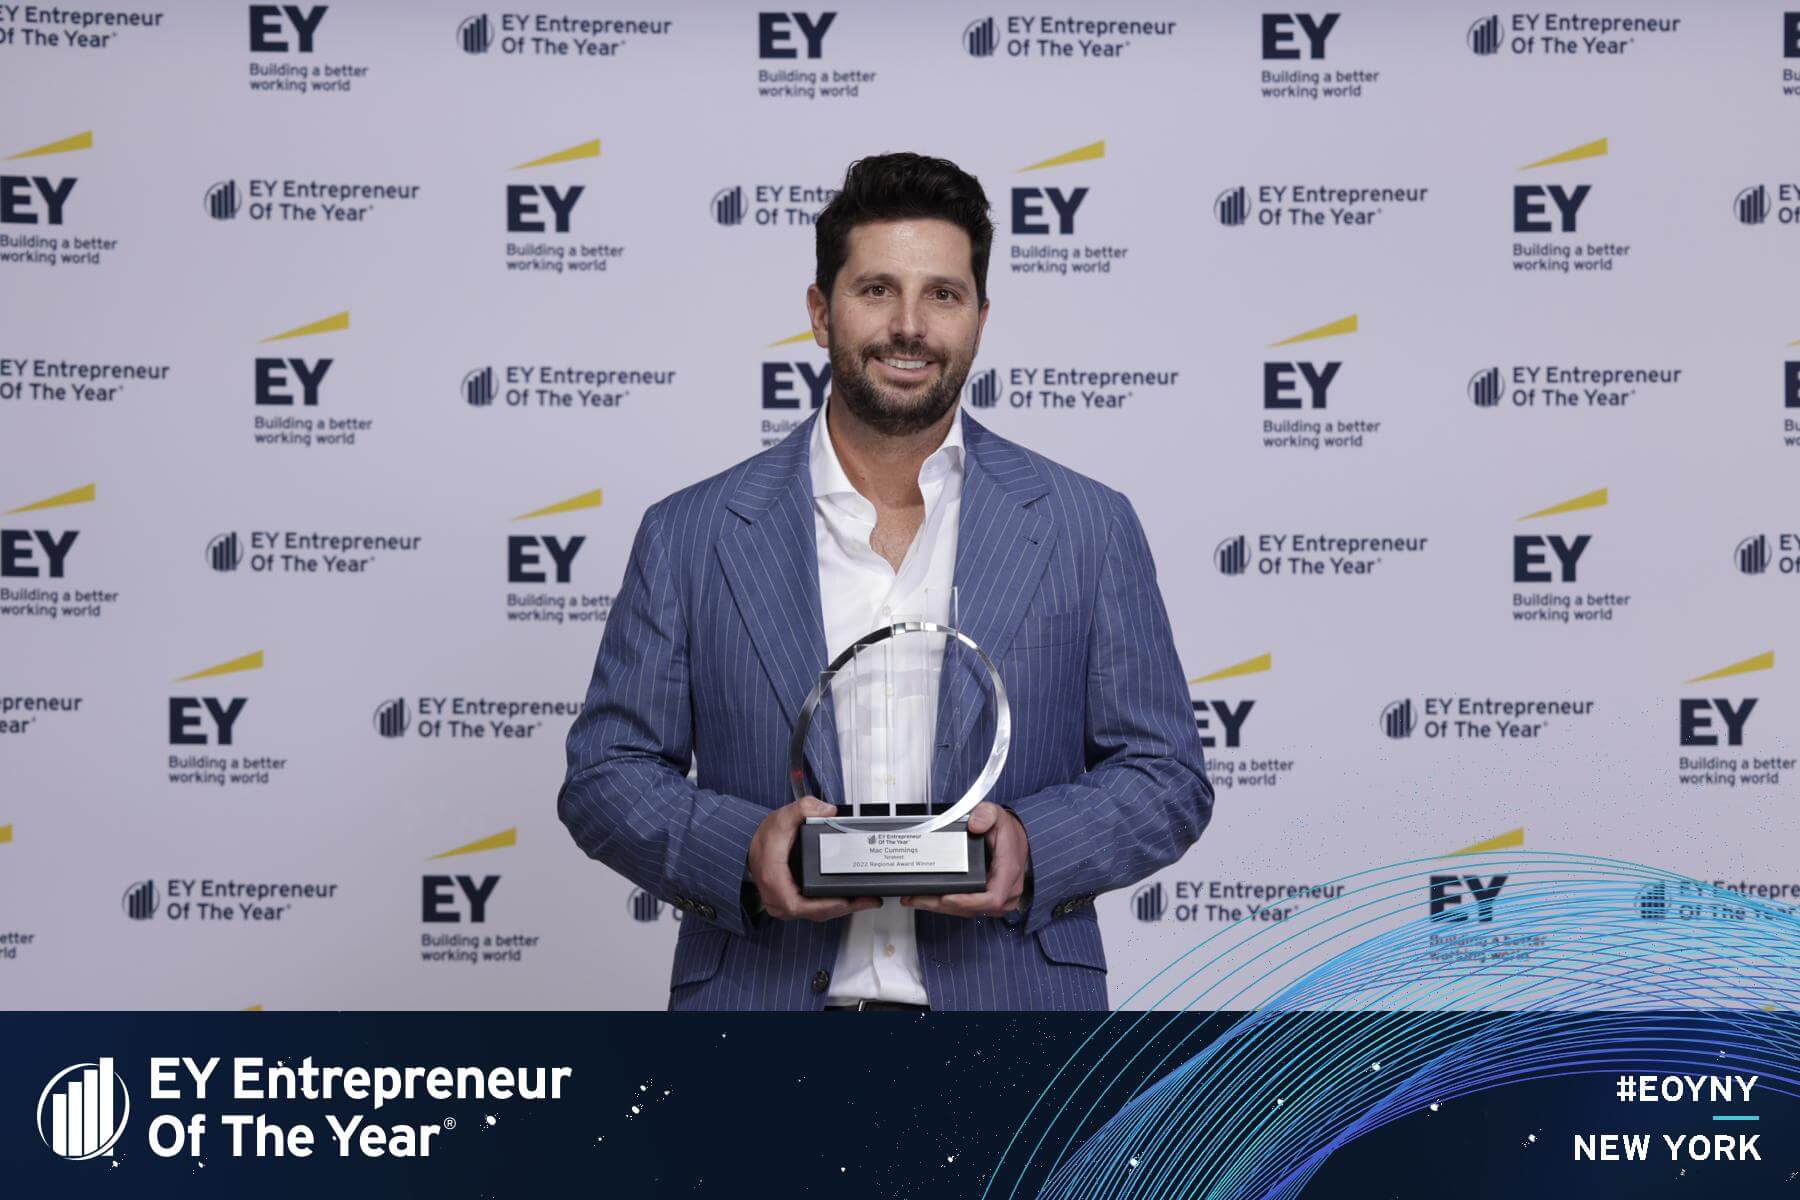 Photo of MacLaren “Mac” Cummings receiving the EY Entrepreneur Of The Year award